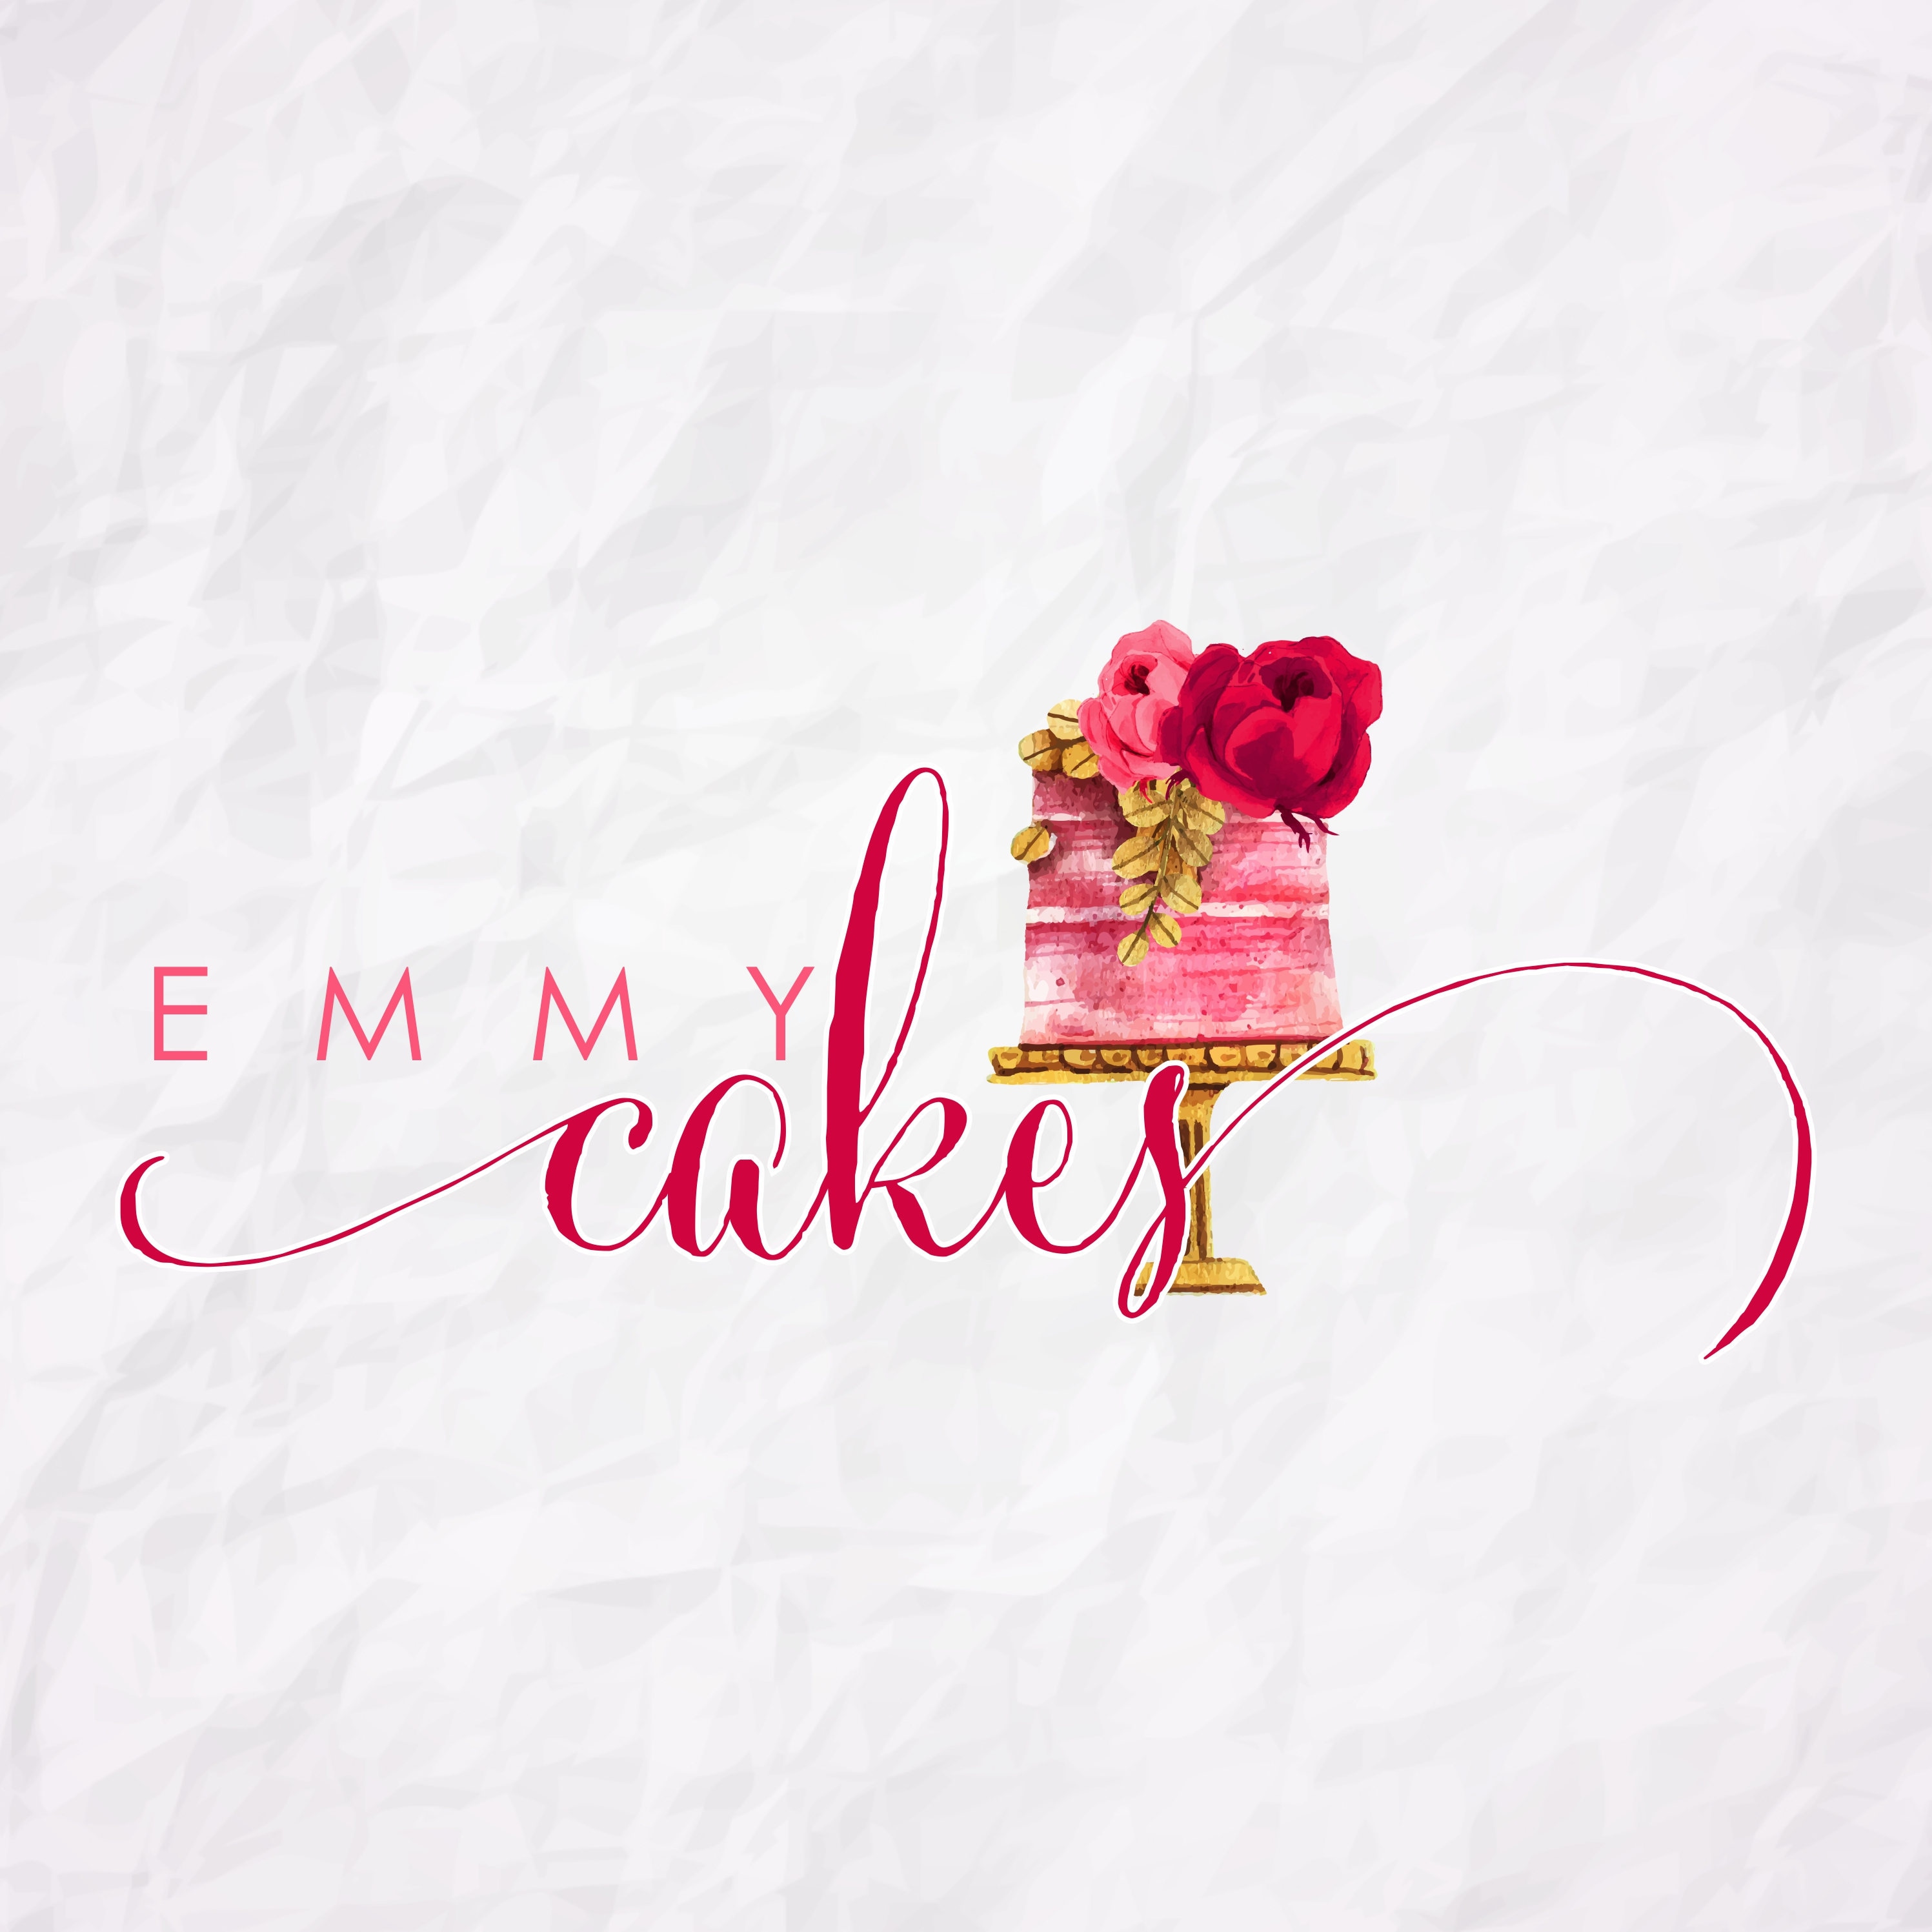 Cake bakery logo design inspiration Royalty Free Vector